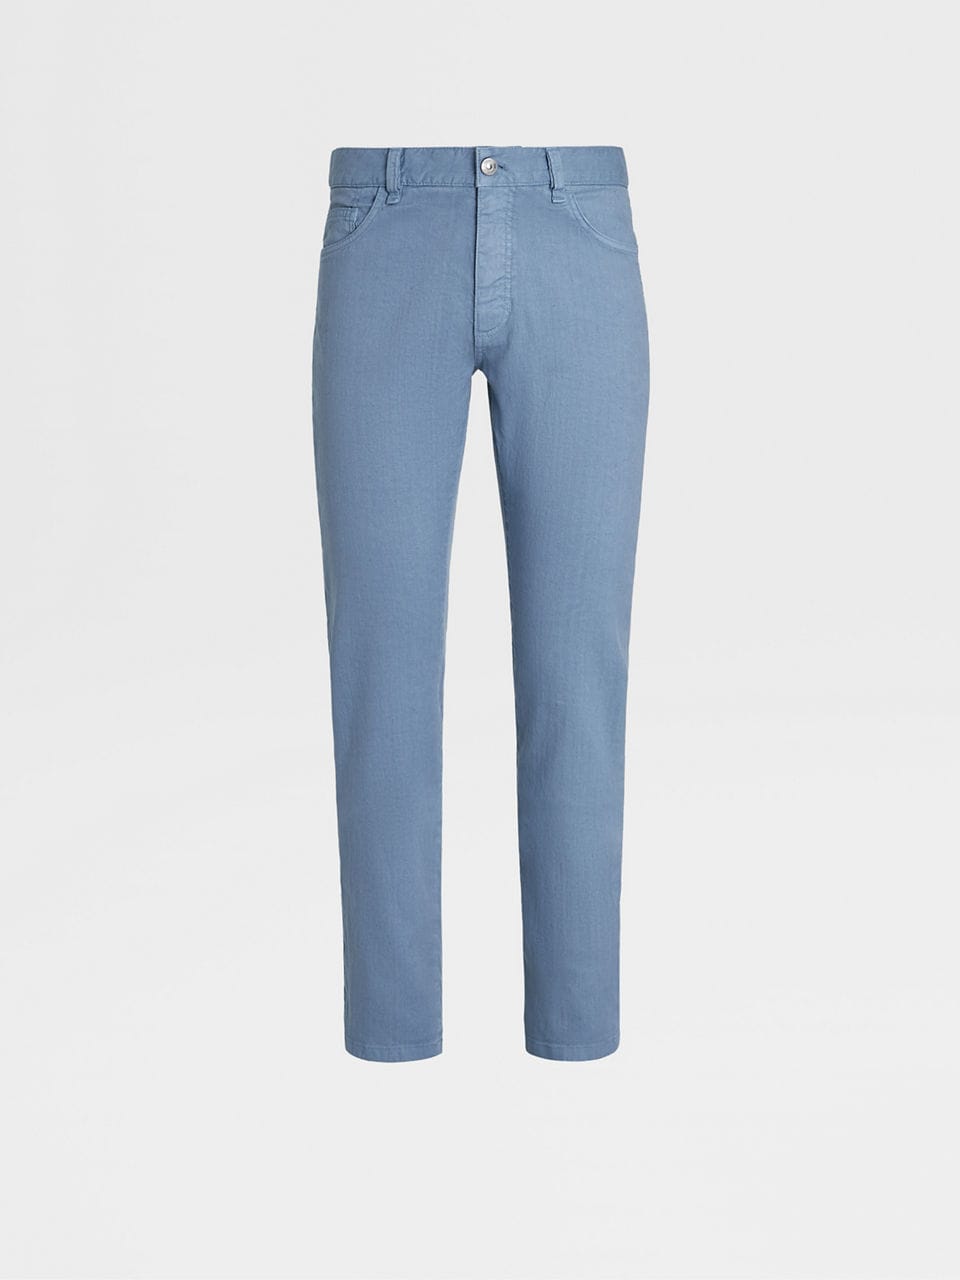 ZEGNA Blue Roccia Jeans